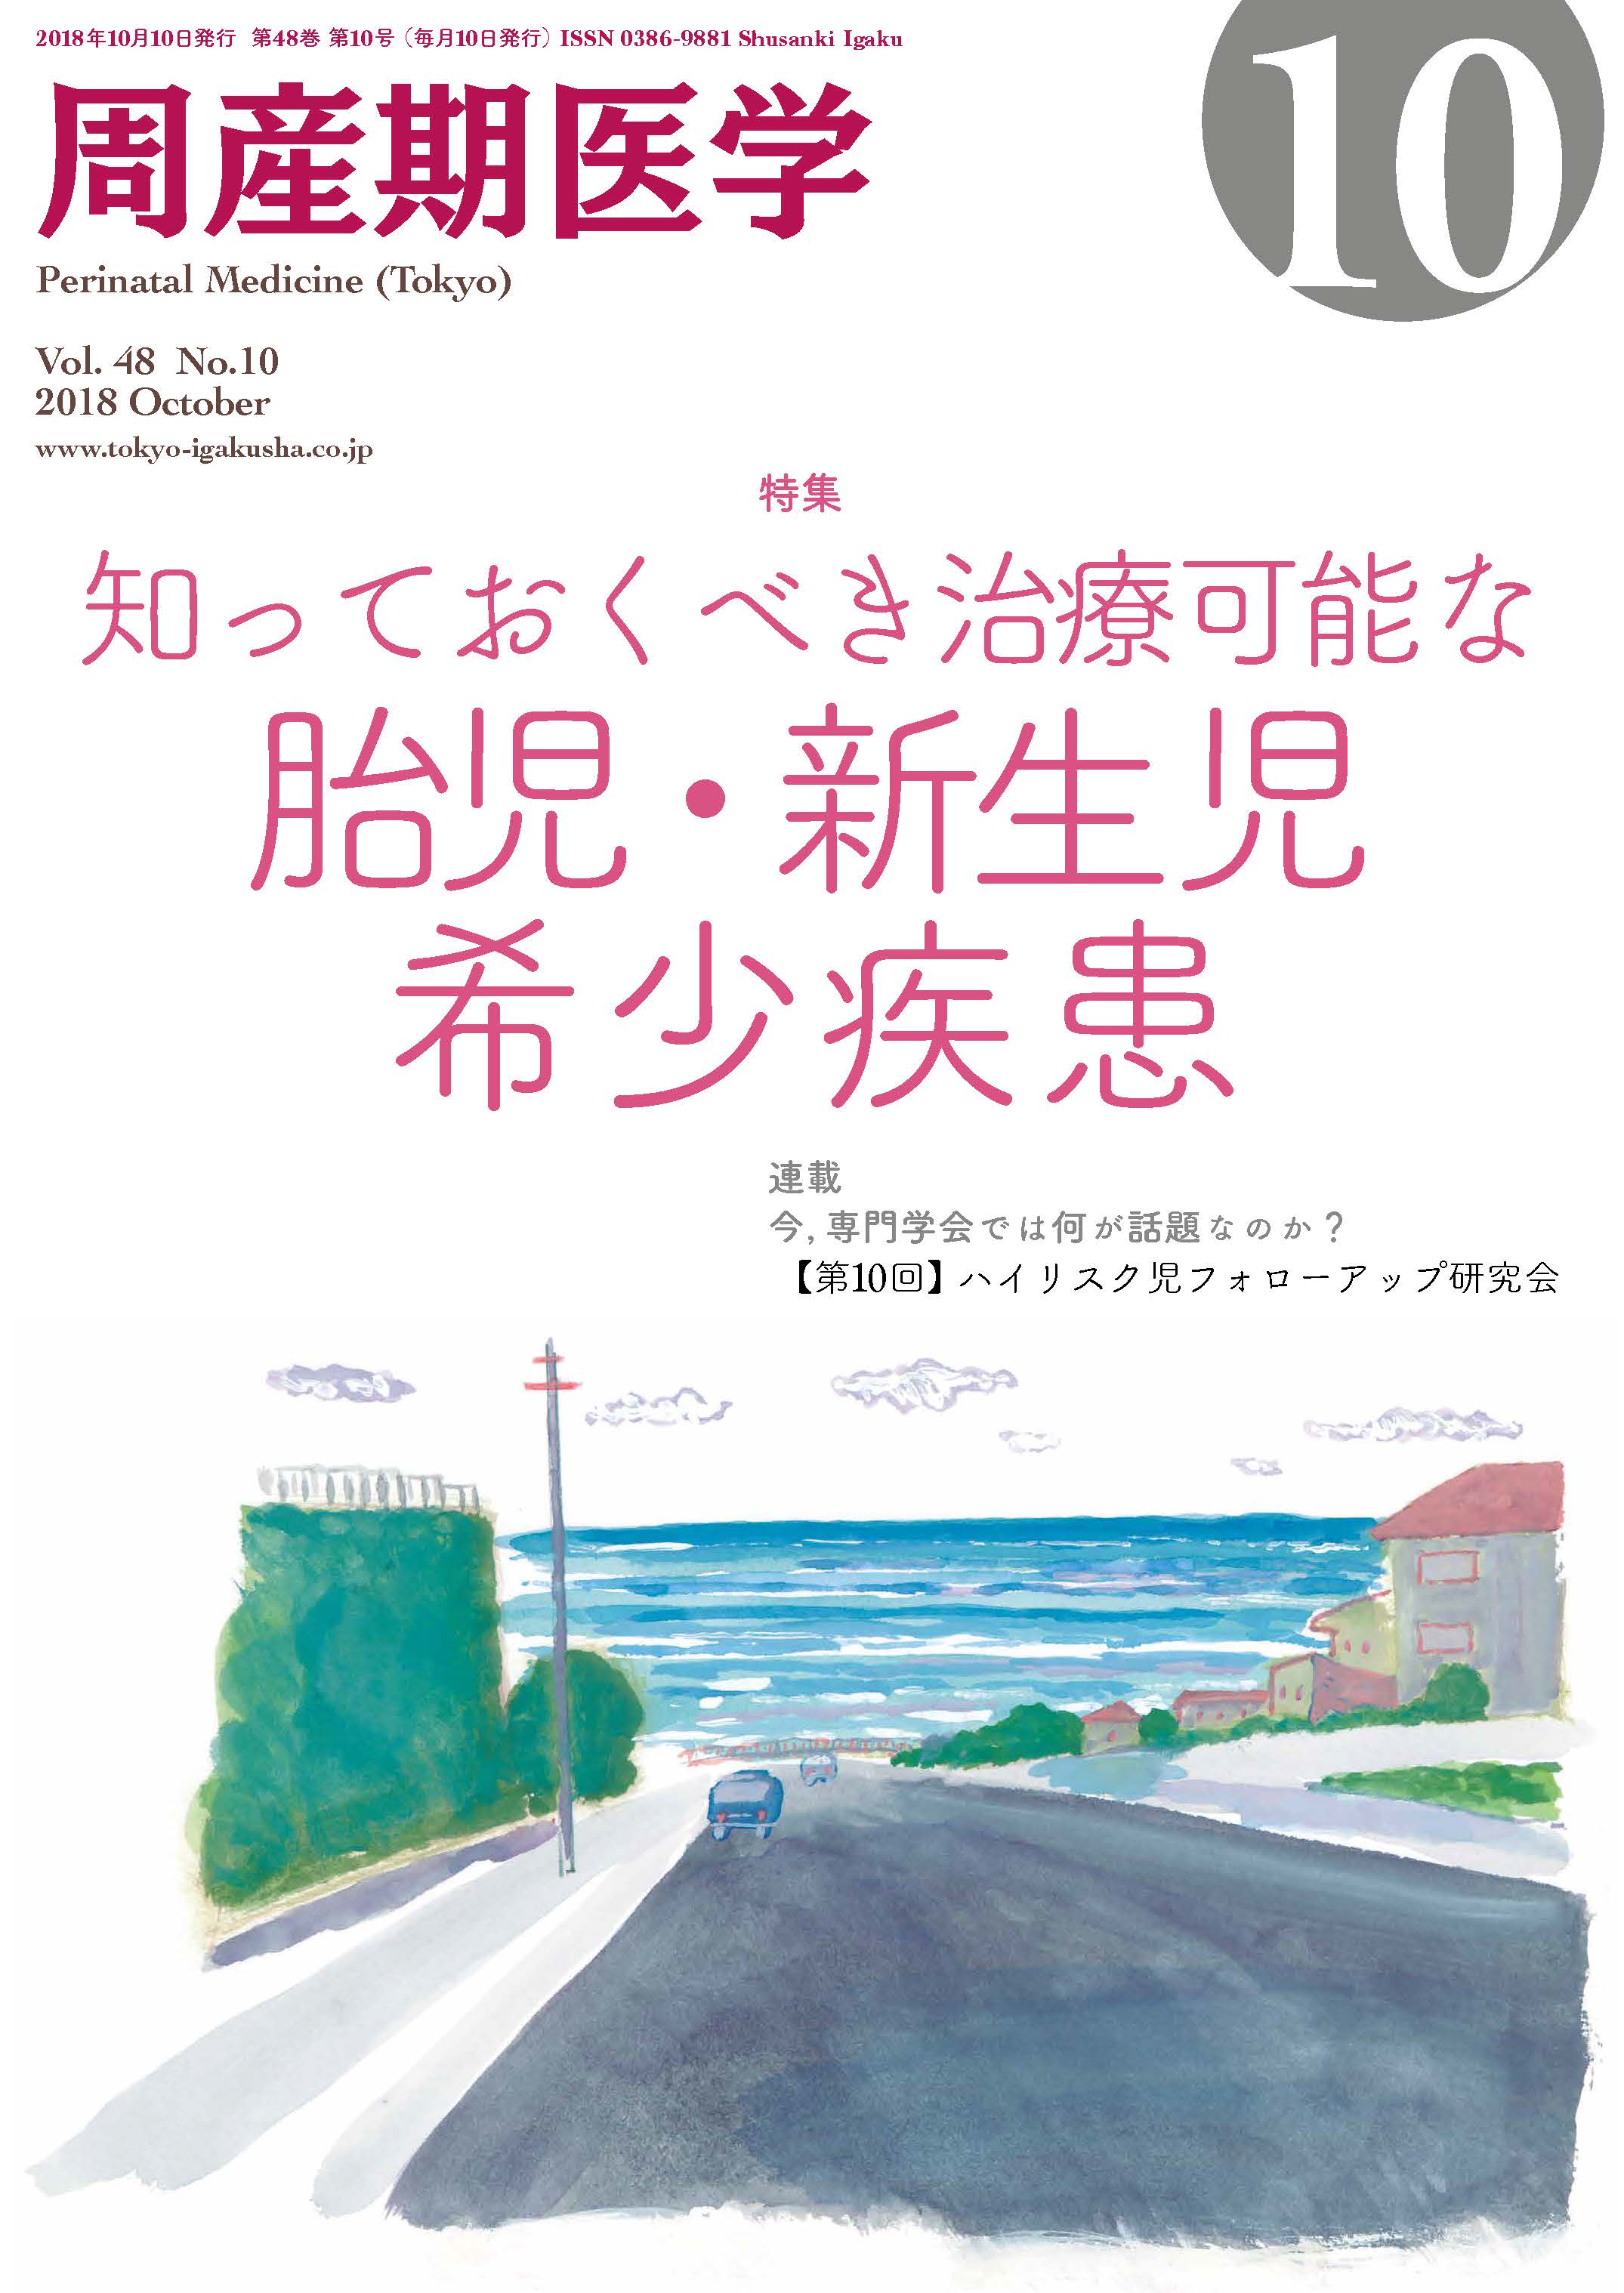 ISBN13周産期医学 2016年 10 月号 [雑誌]